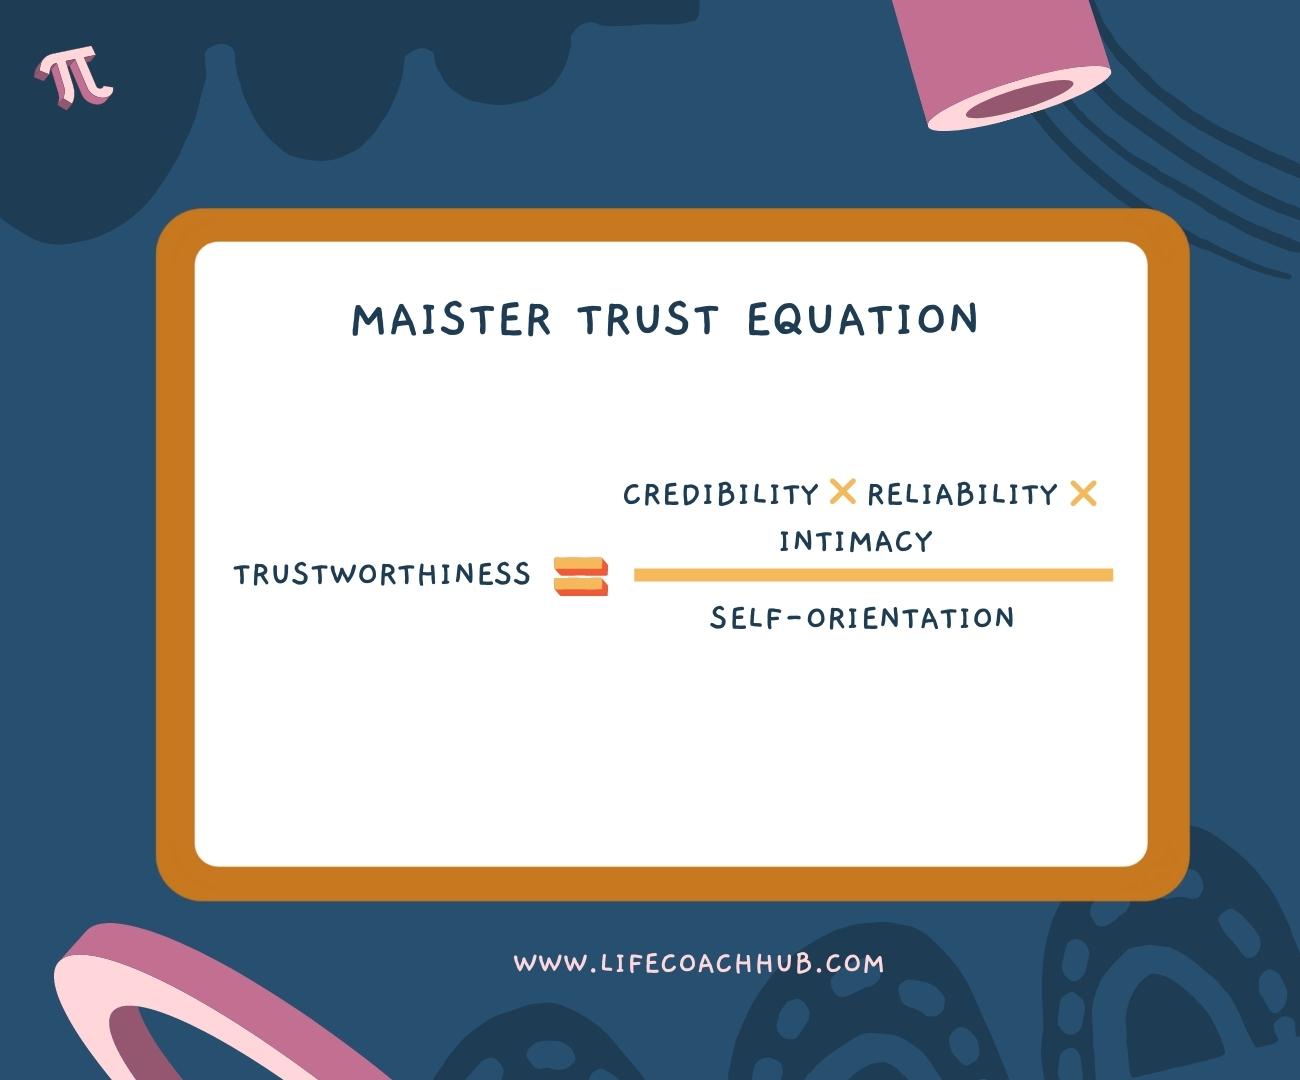 The Maister Trust Equation